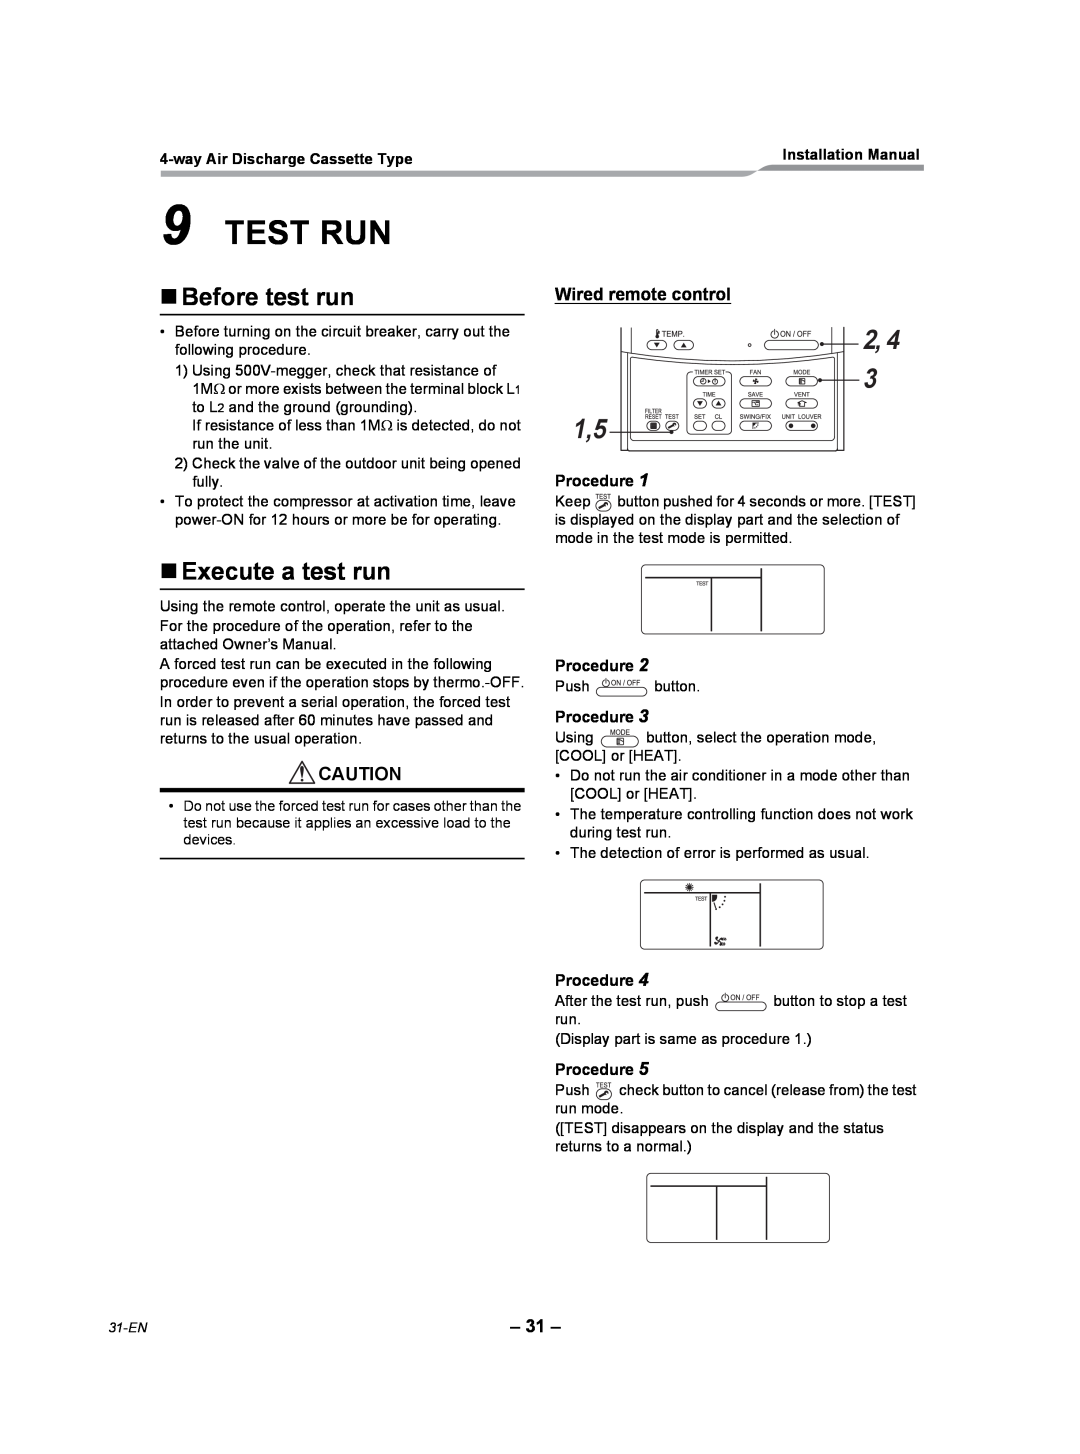 Toshiba RAV-SP180UT-UL Test Run, 2, 4 1,5, „Before test run, „Execute a test run, Wired remote control, Procedure 